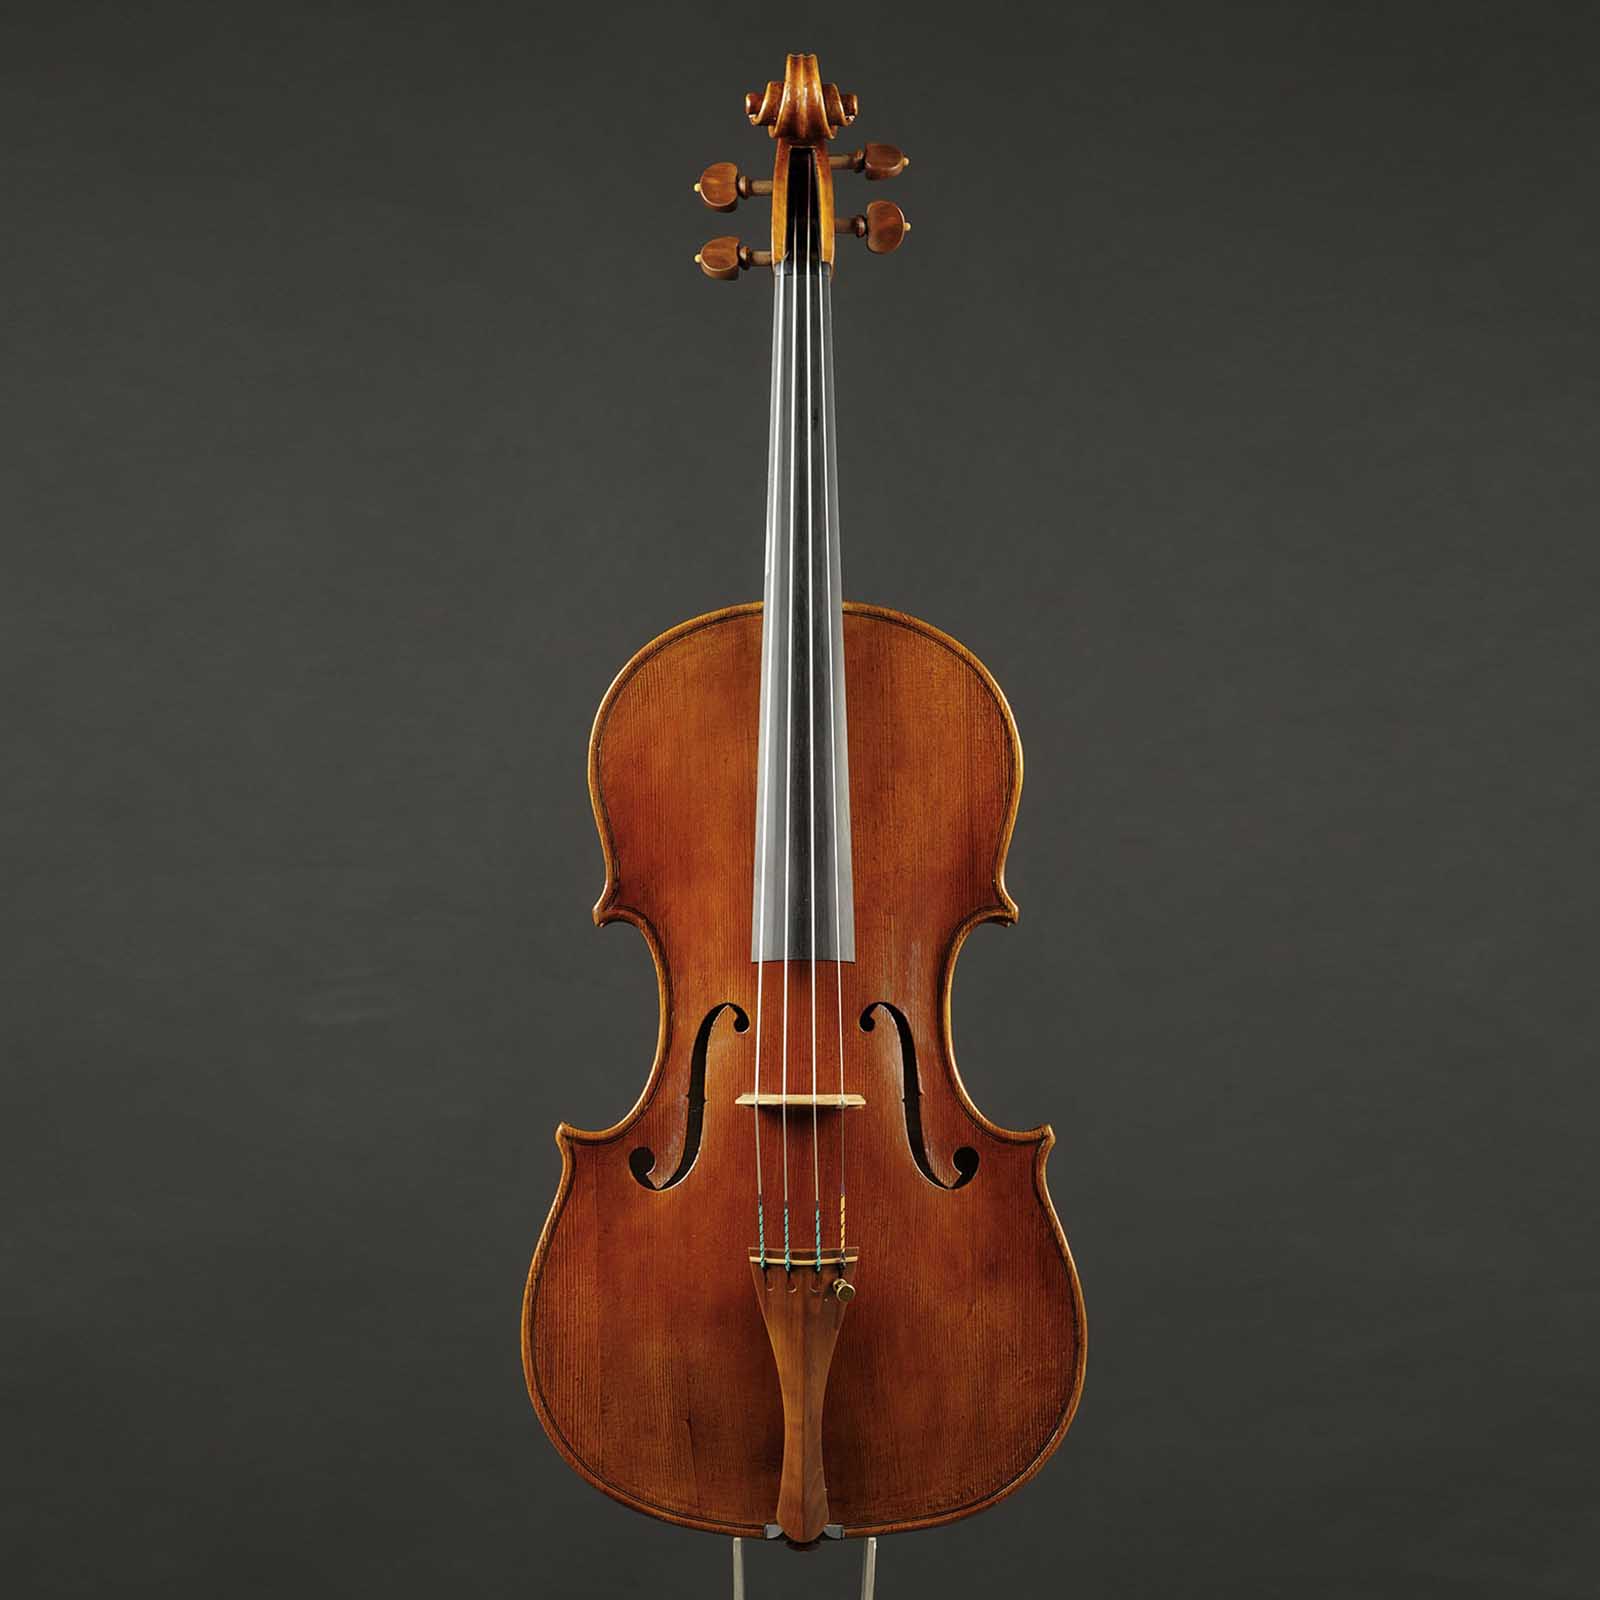 Antonio Stradivari Cremona 1672 “Renaissance Wood“ cm 42 - Image 1